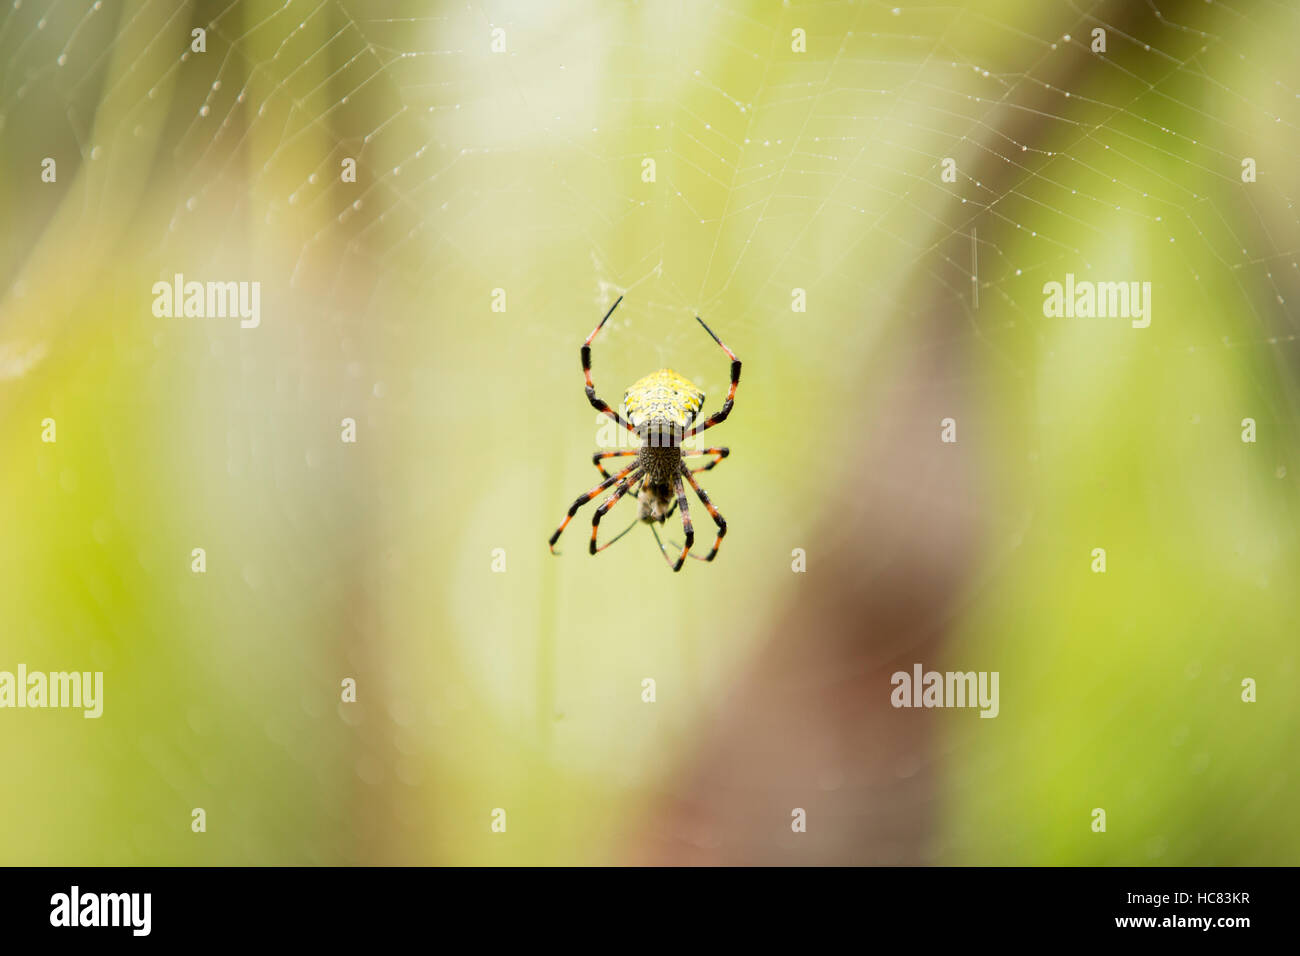 Hawaiian Garden Spider Spinning A Web Stock Photo 128026971 Alamy